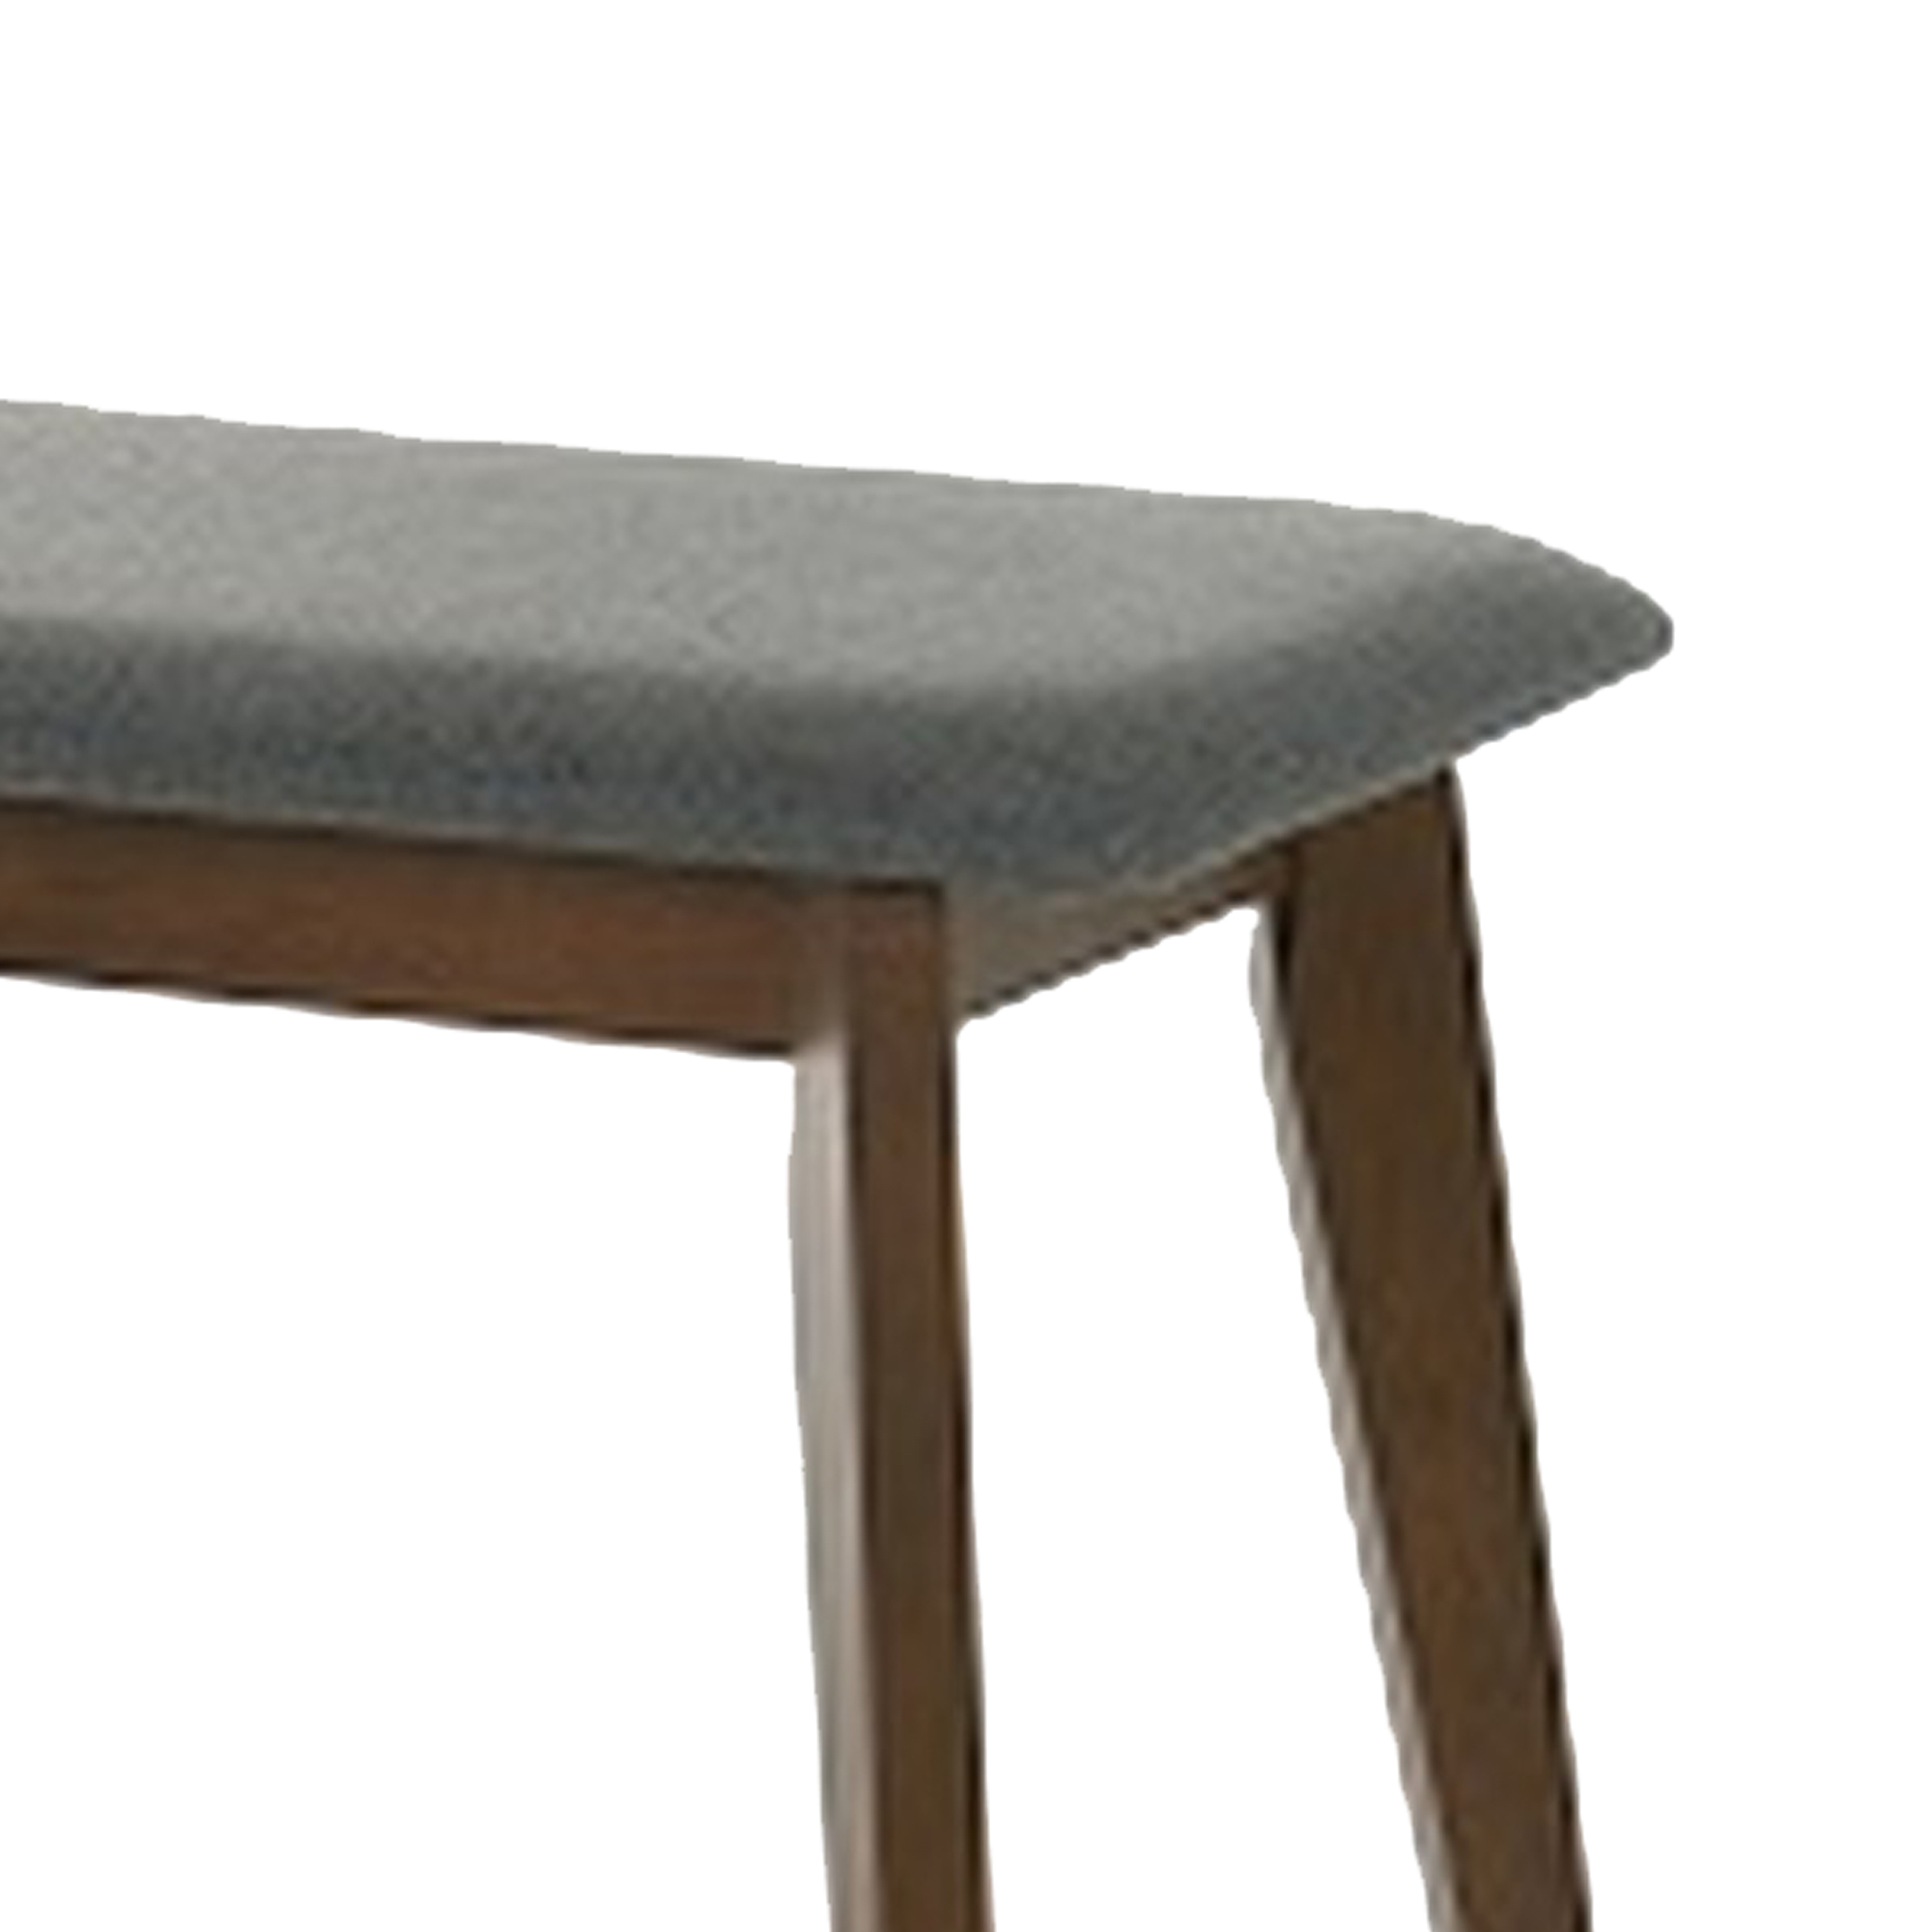 Cid Cyla 47 Inch Dining Bench, Soft Gray Fabric Upholstery, Walnut Wood- Saltoro Sherpi